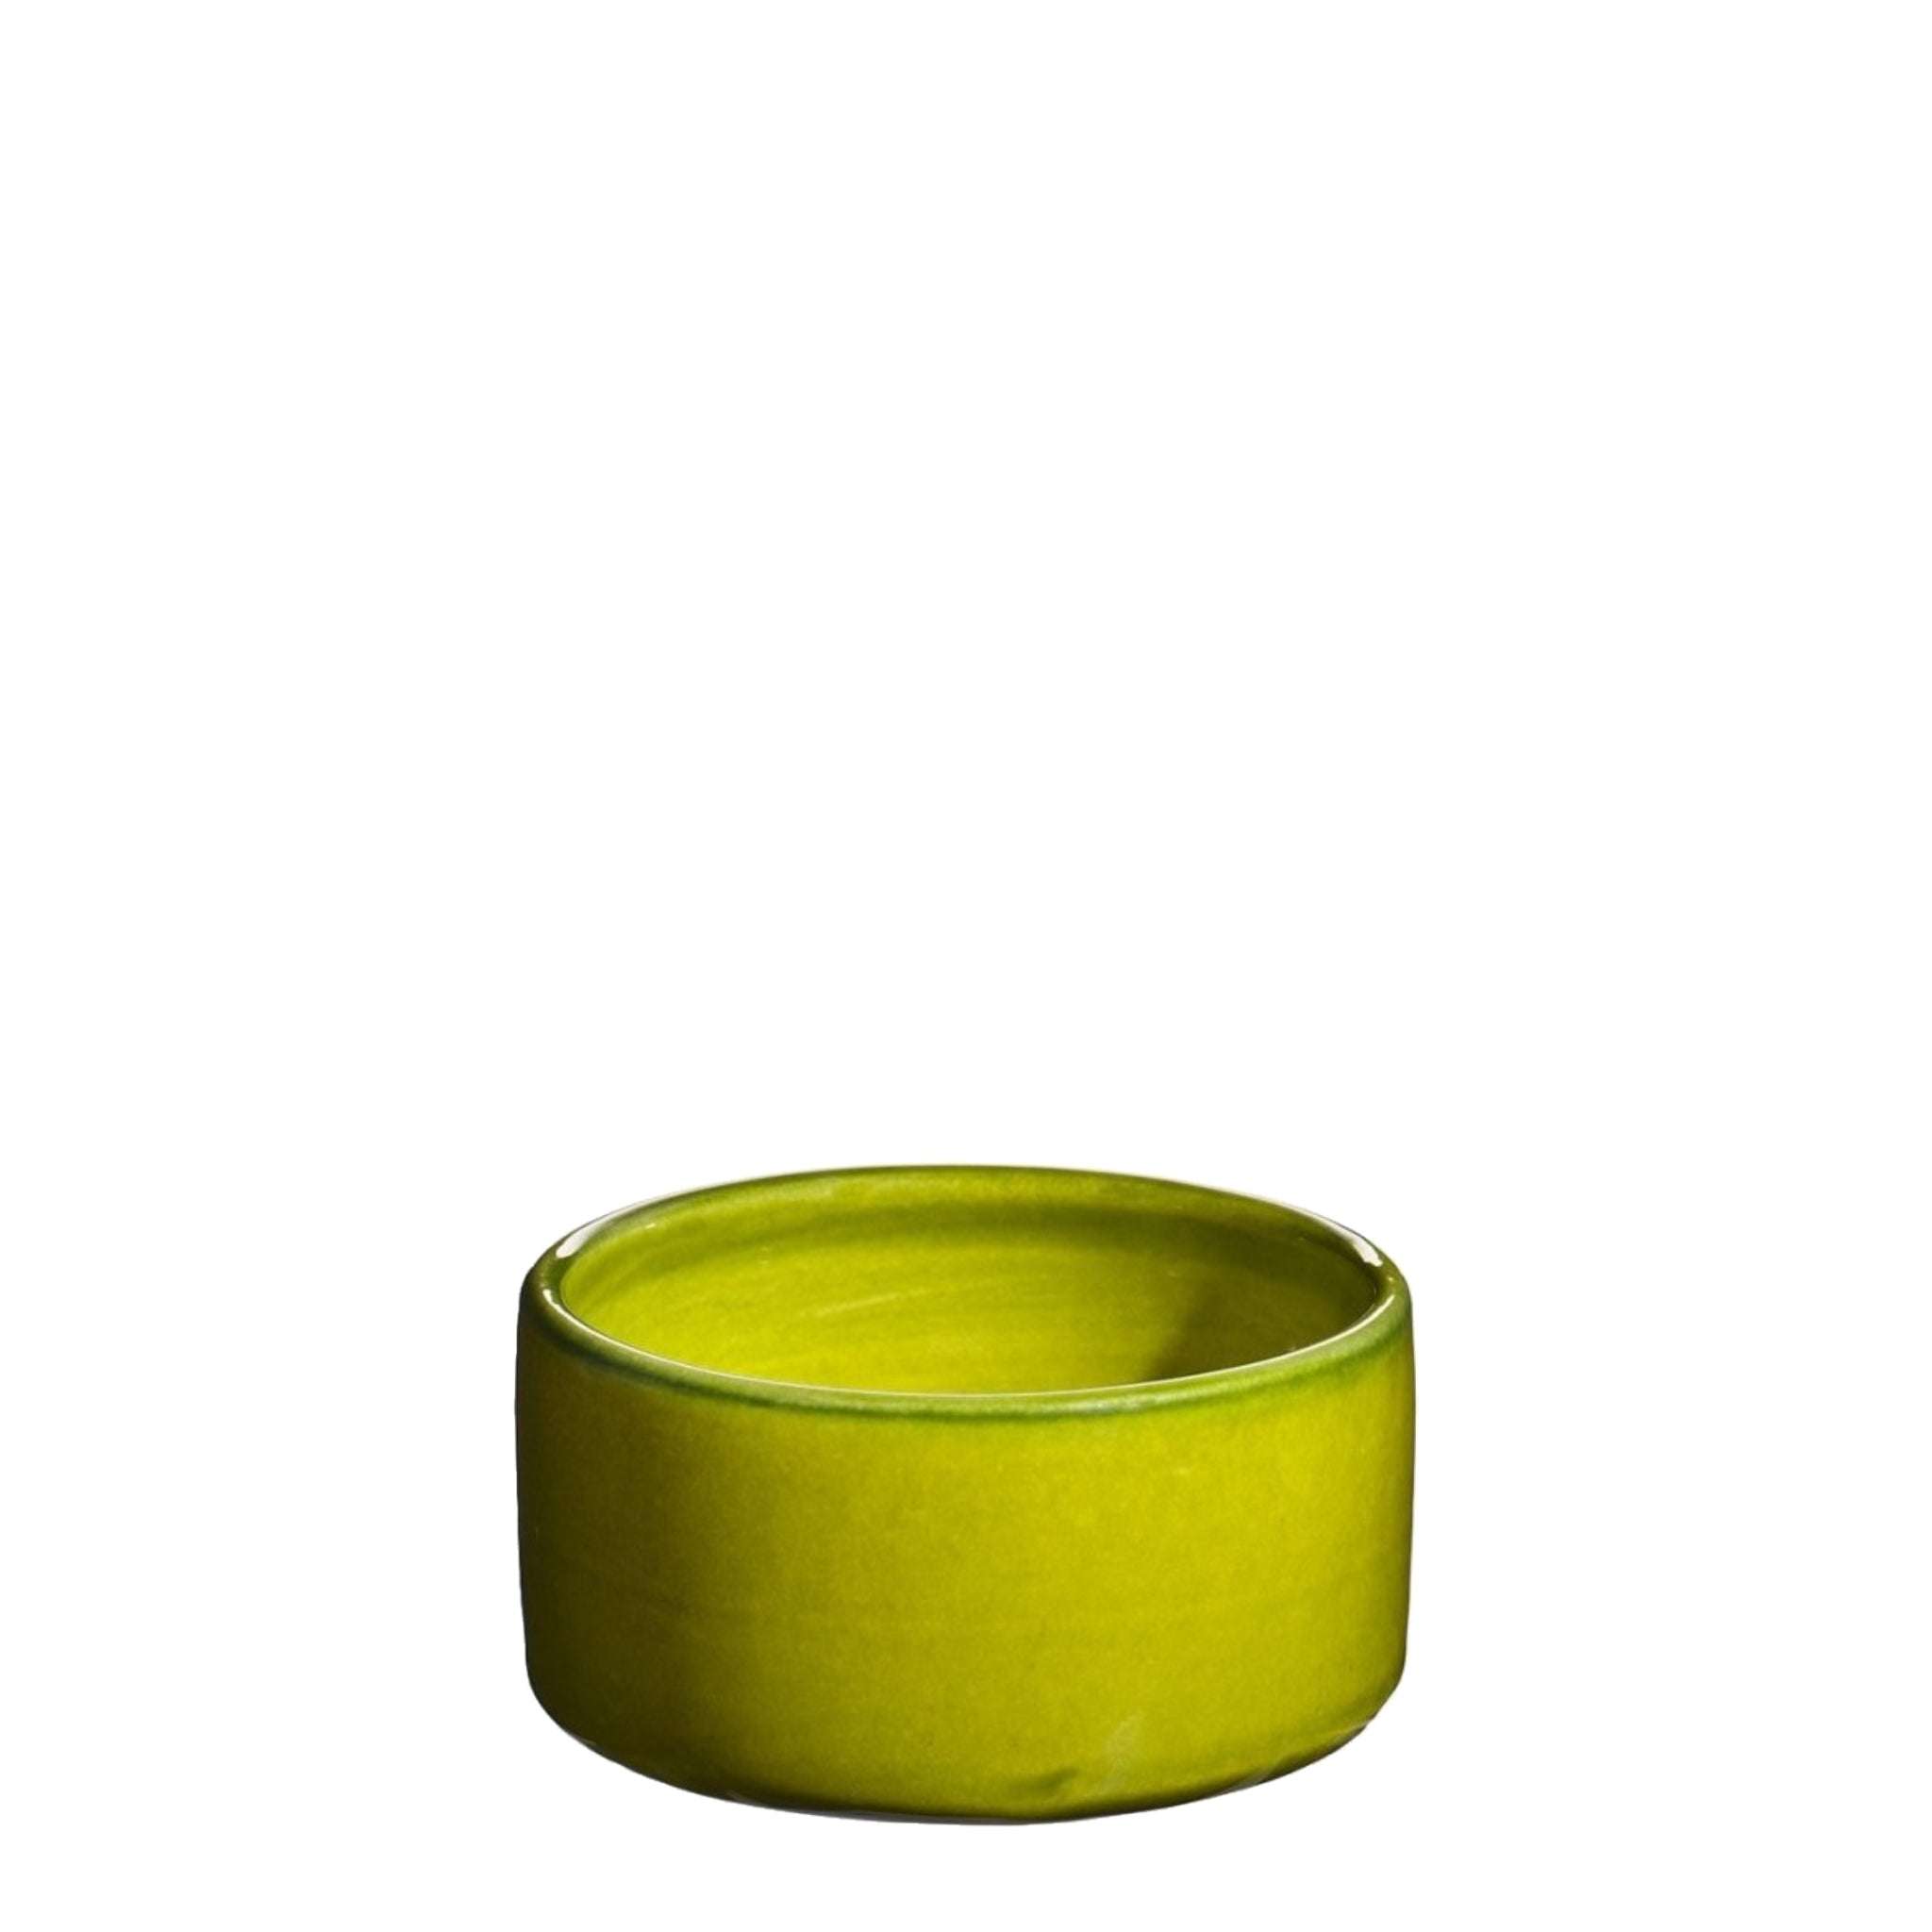 Lille håndlavet keramik skål ramekin petit ravier fra Atelier Bernex i æblegrøn fra Oliviers & Co